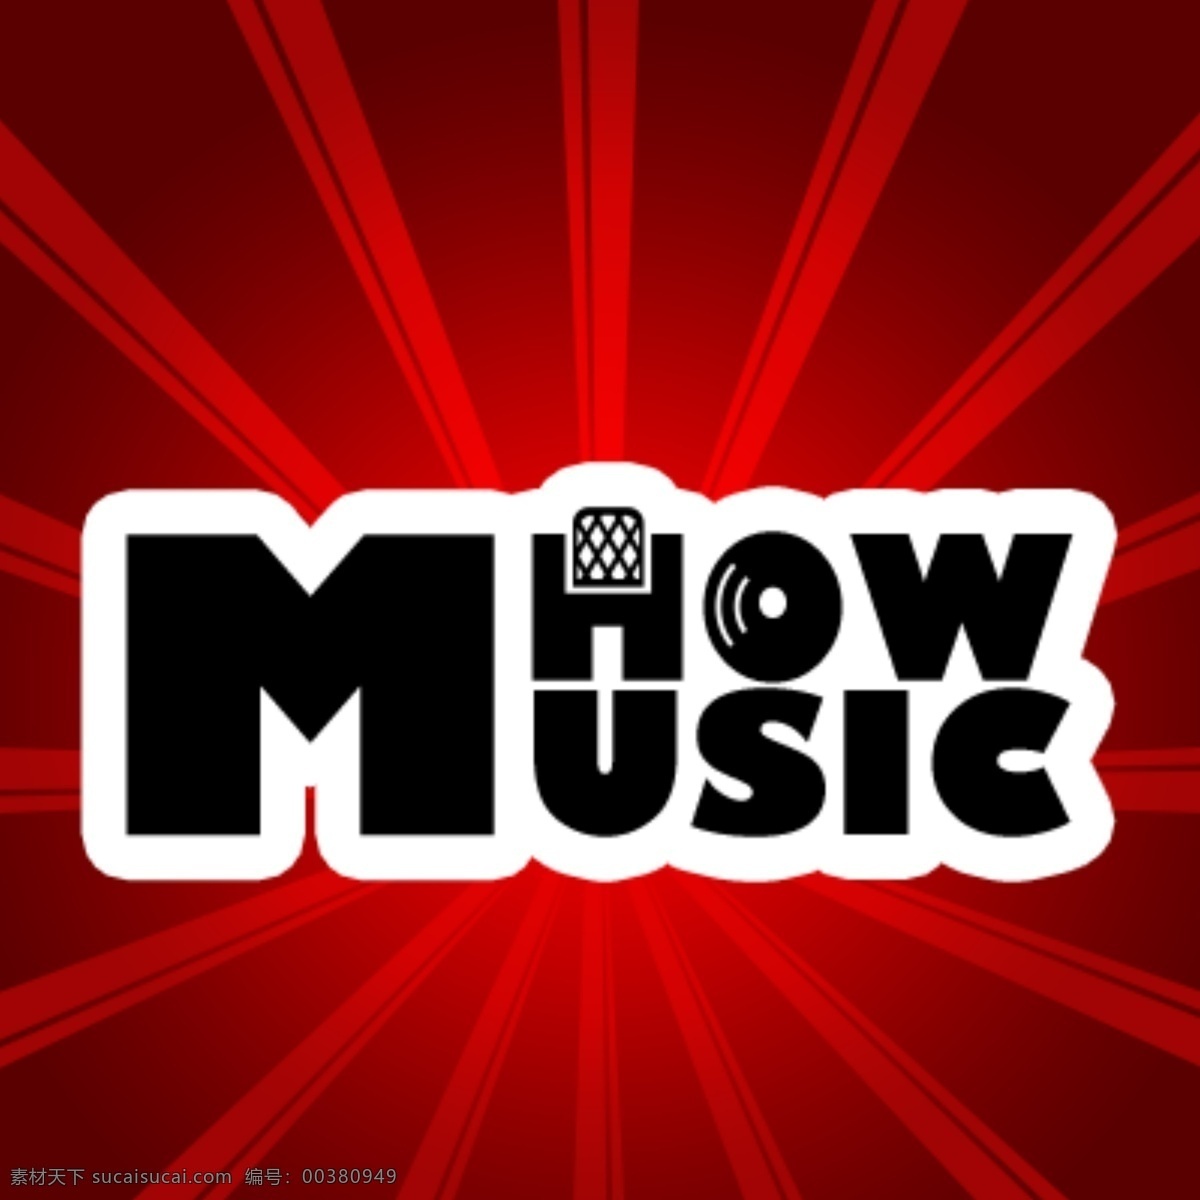 howmusiclogo 音乐 电台 how music logo 红色